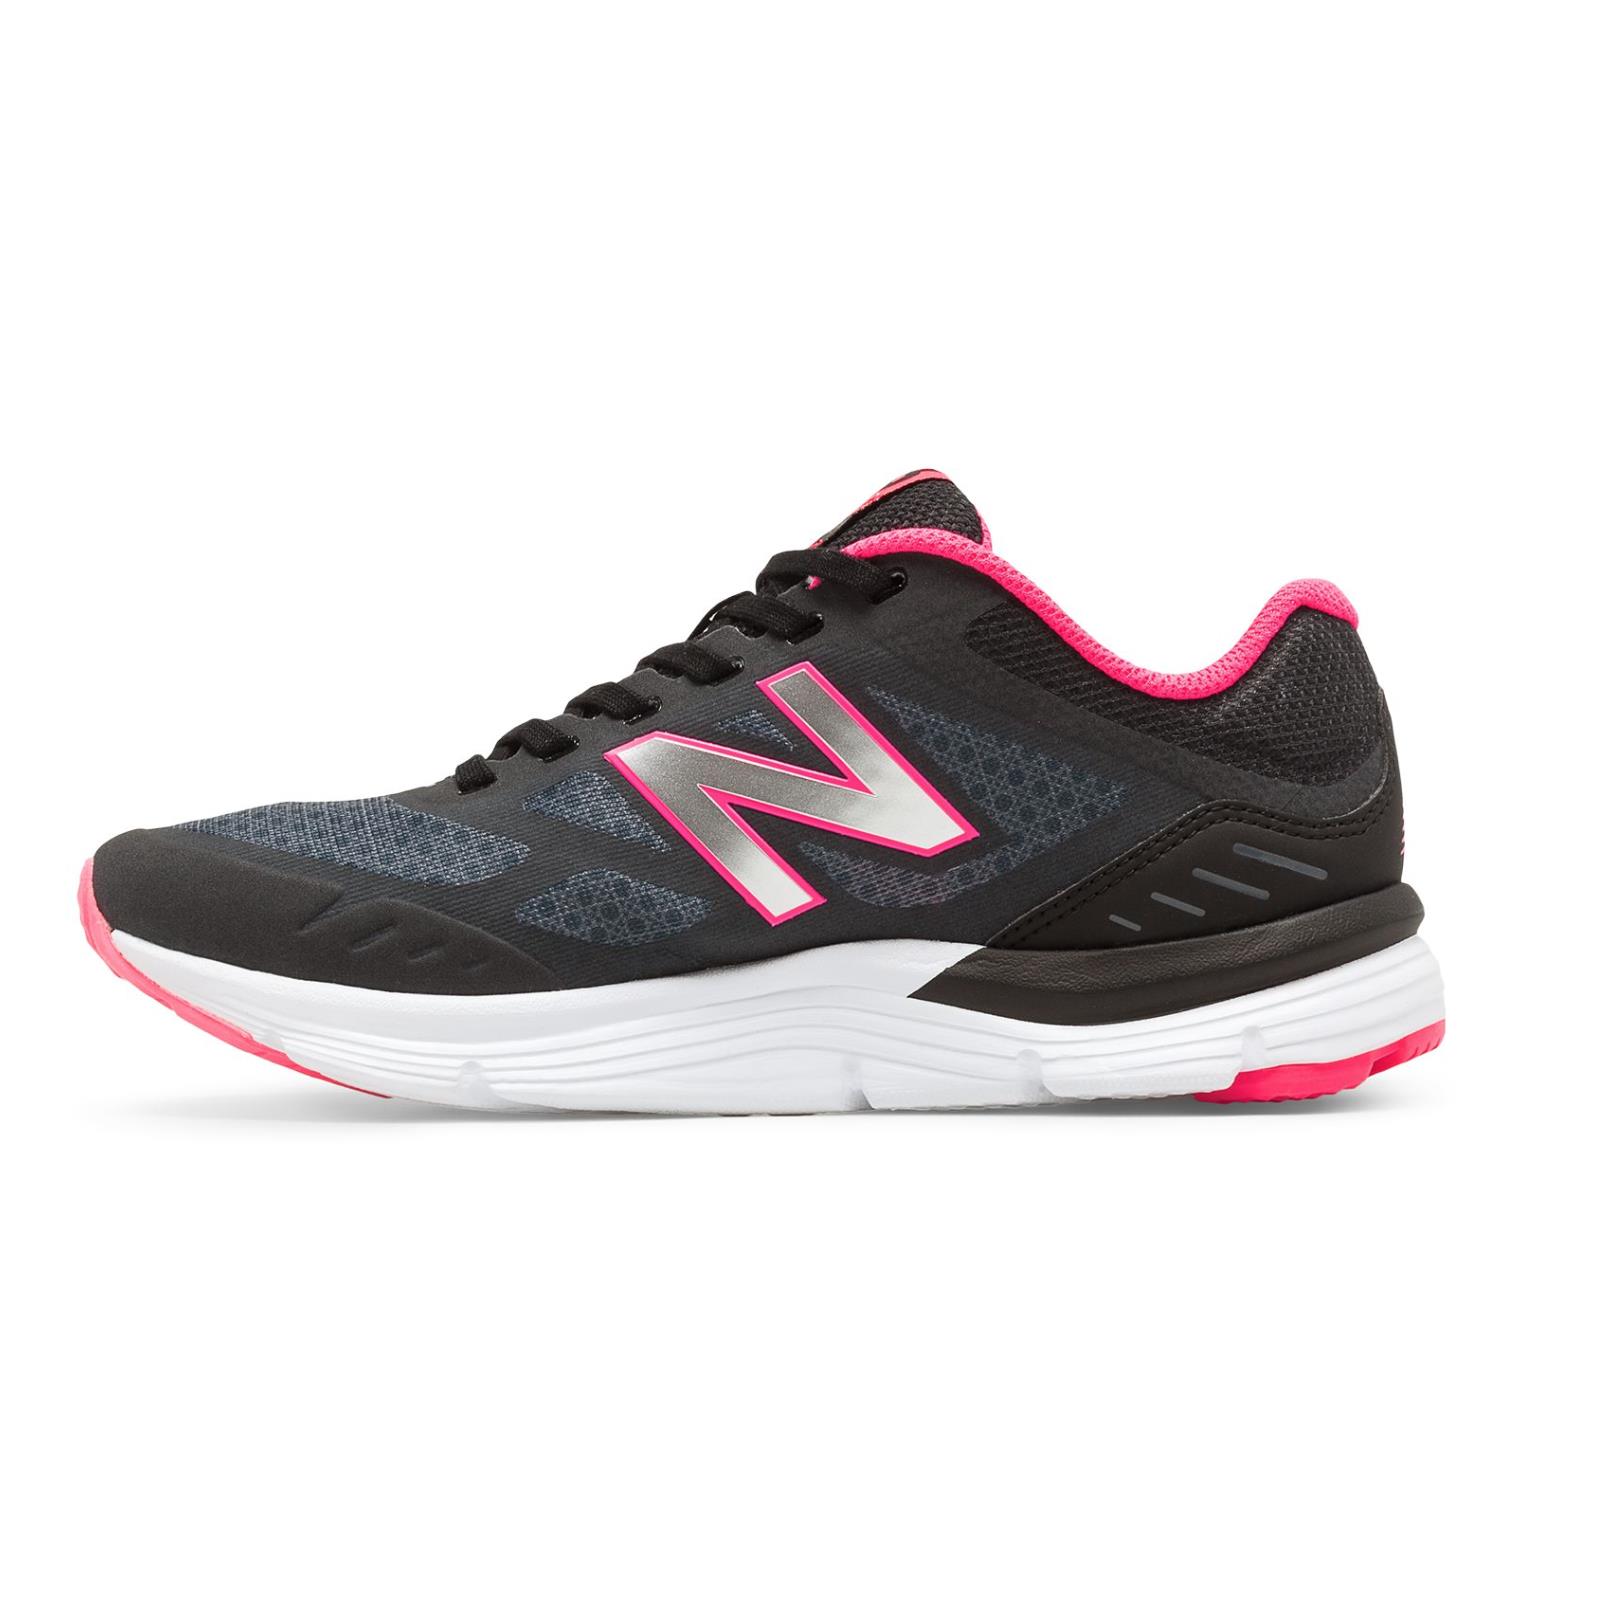 New Balance 775v3 Running Course Shoes Black N1290 Women Size 6.5 B - Black